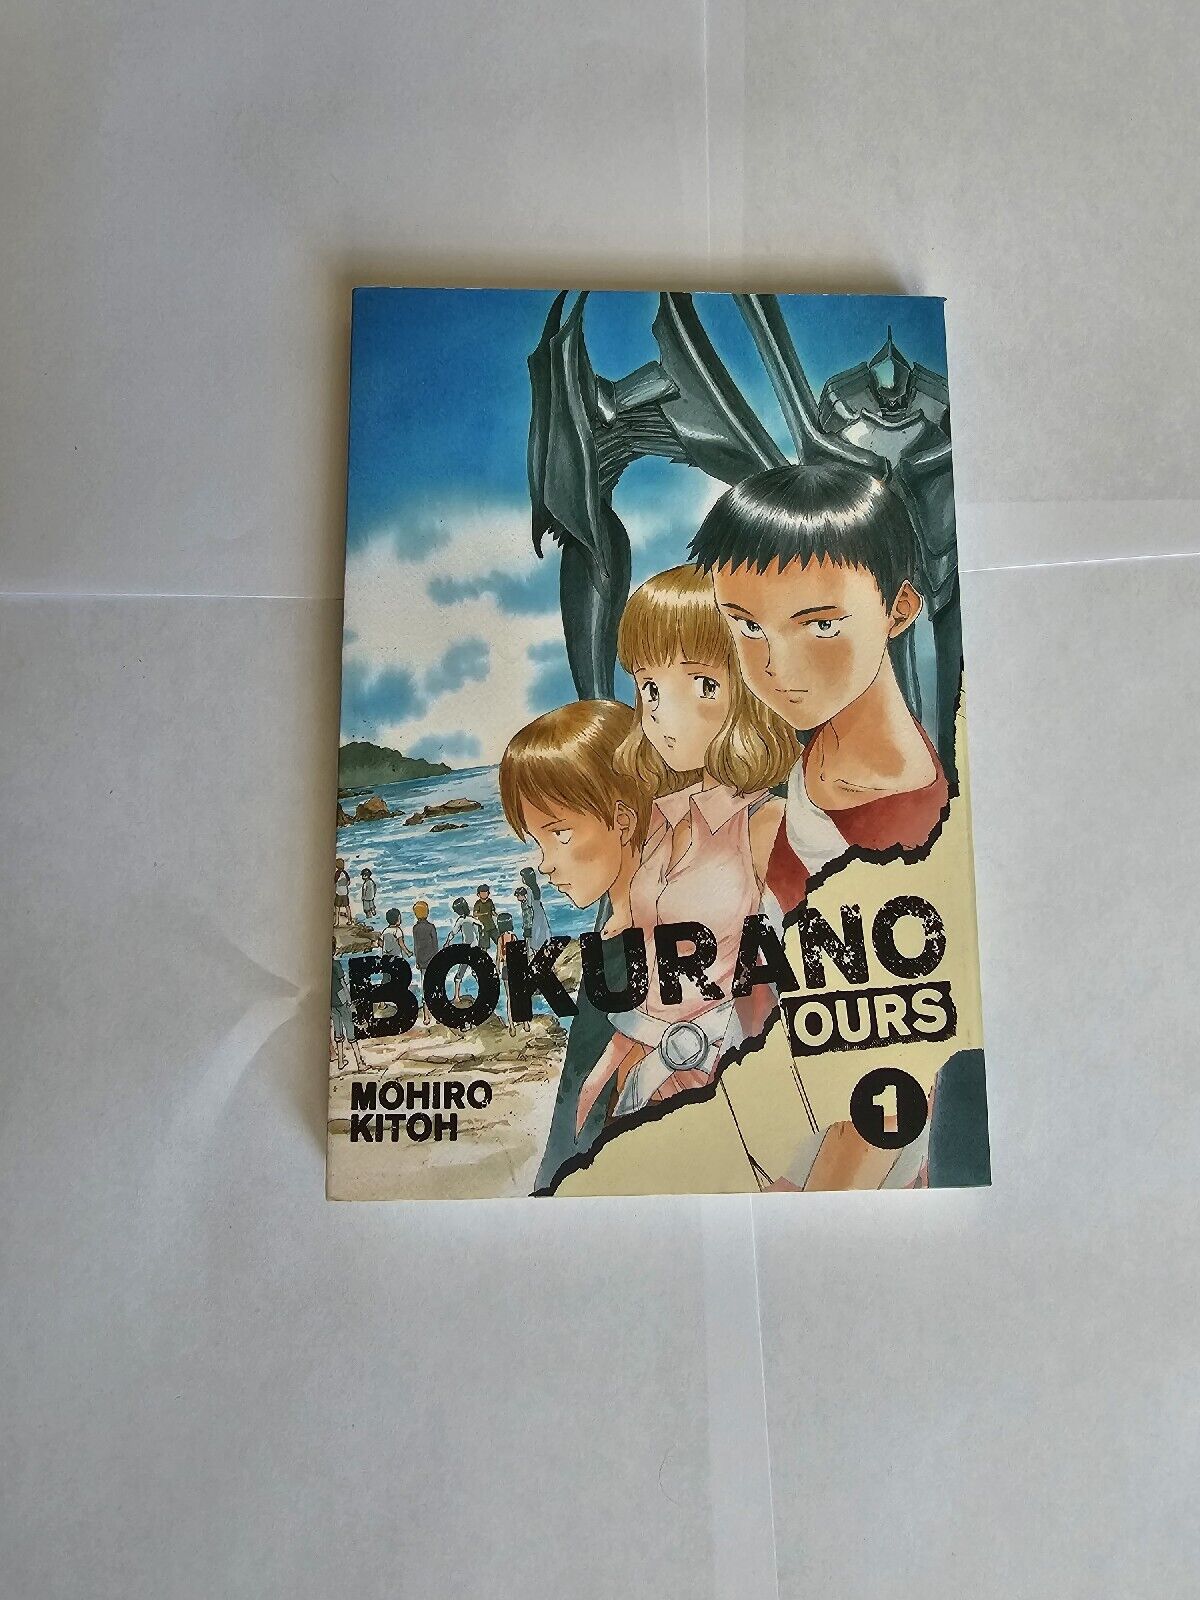 Bokurano Ours MANGA Vol 1 by Mohiro Kitoh - in English RARE